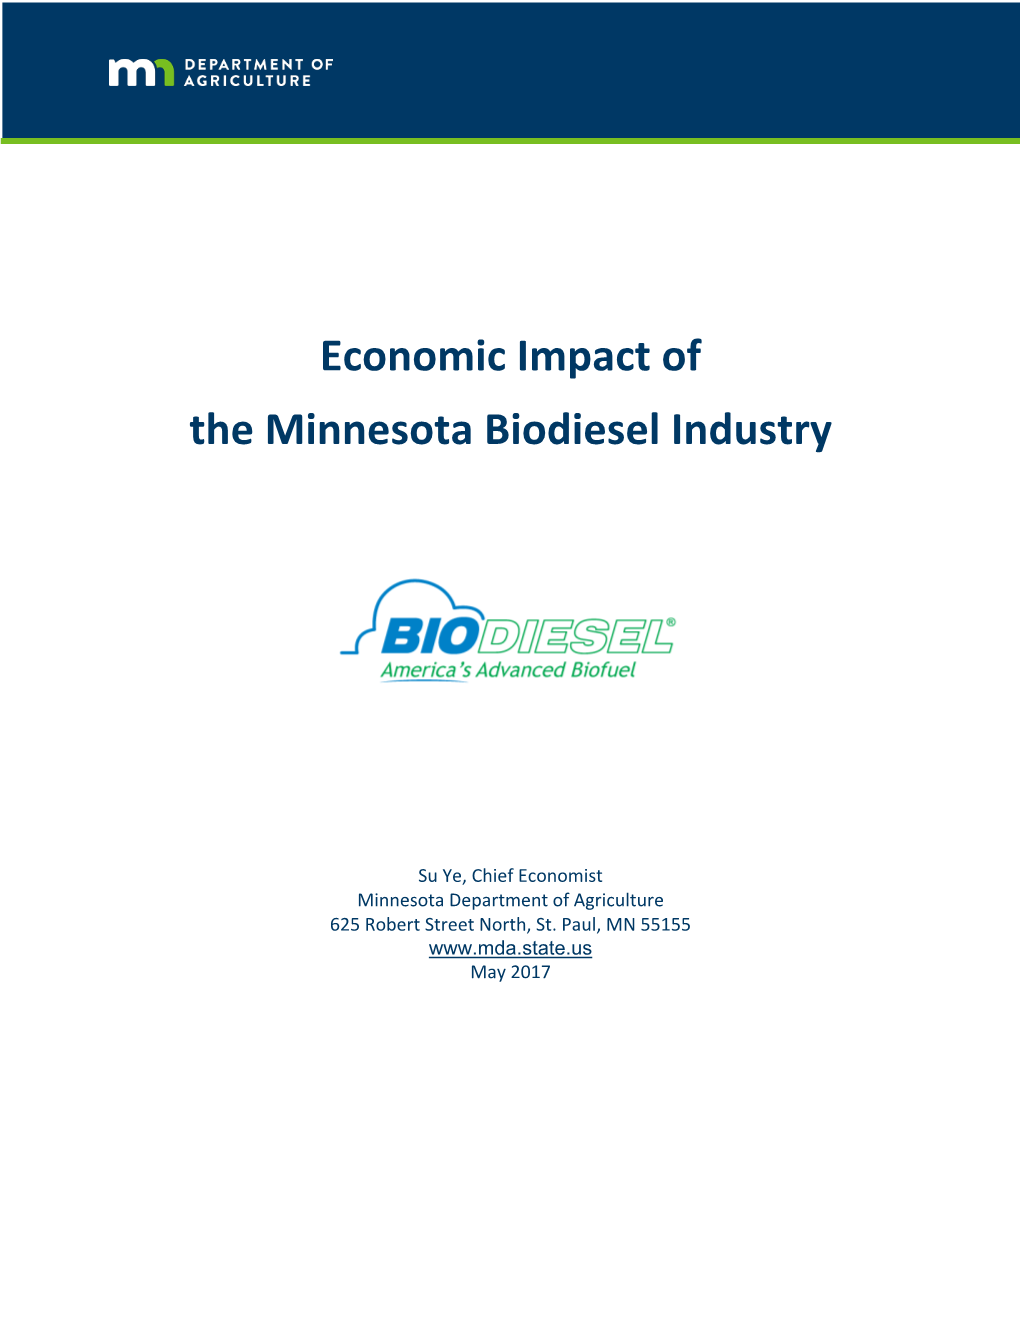 Economic Impact of Biodiesel in Minnesota, Full Report (PDF)